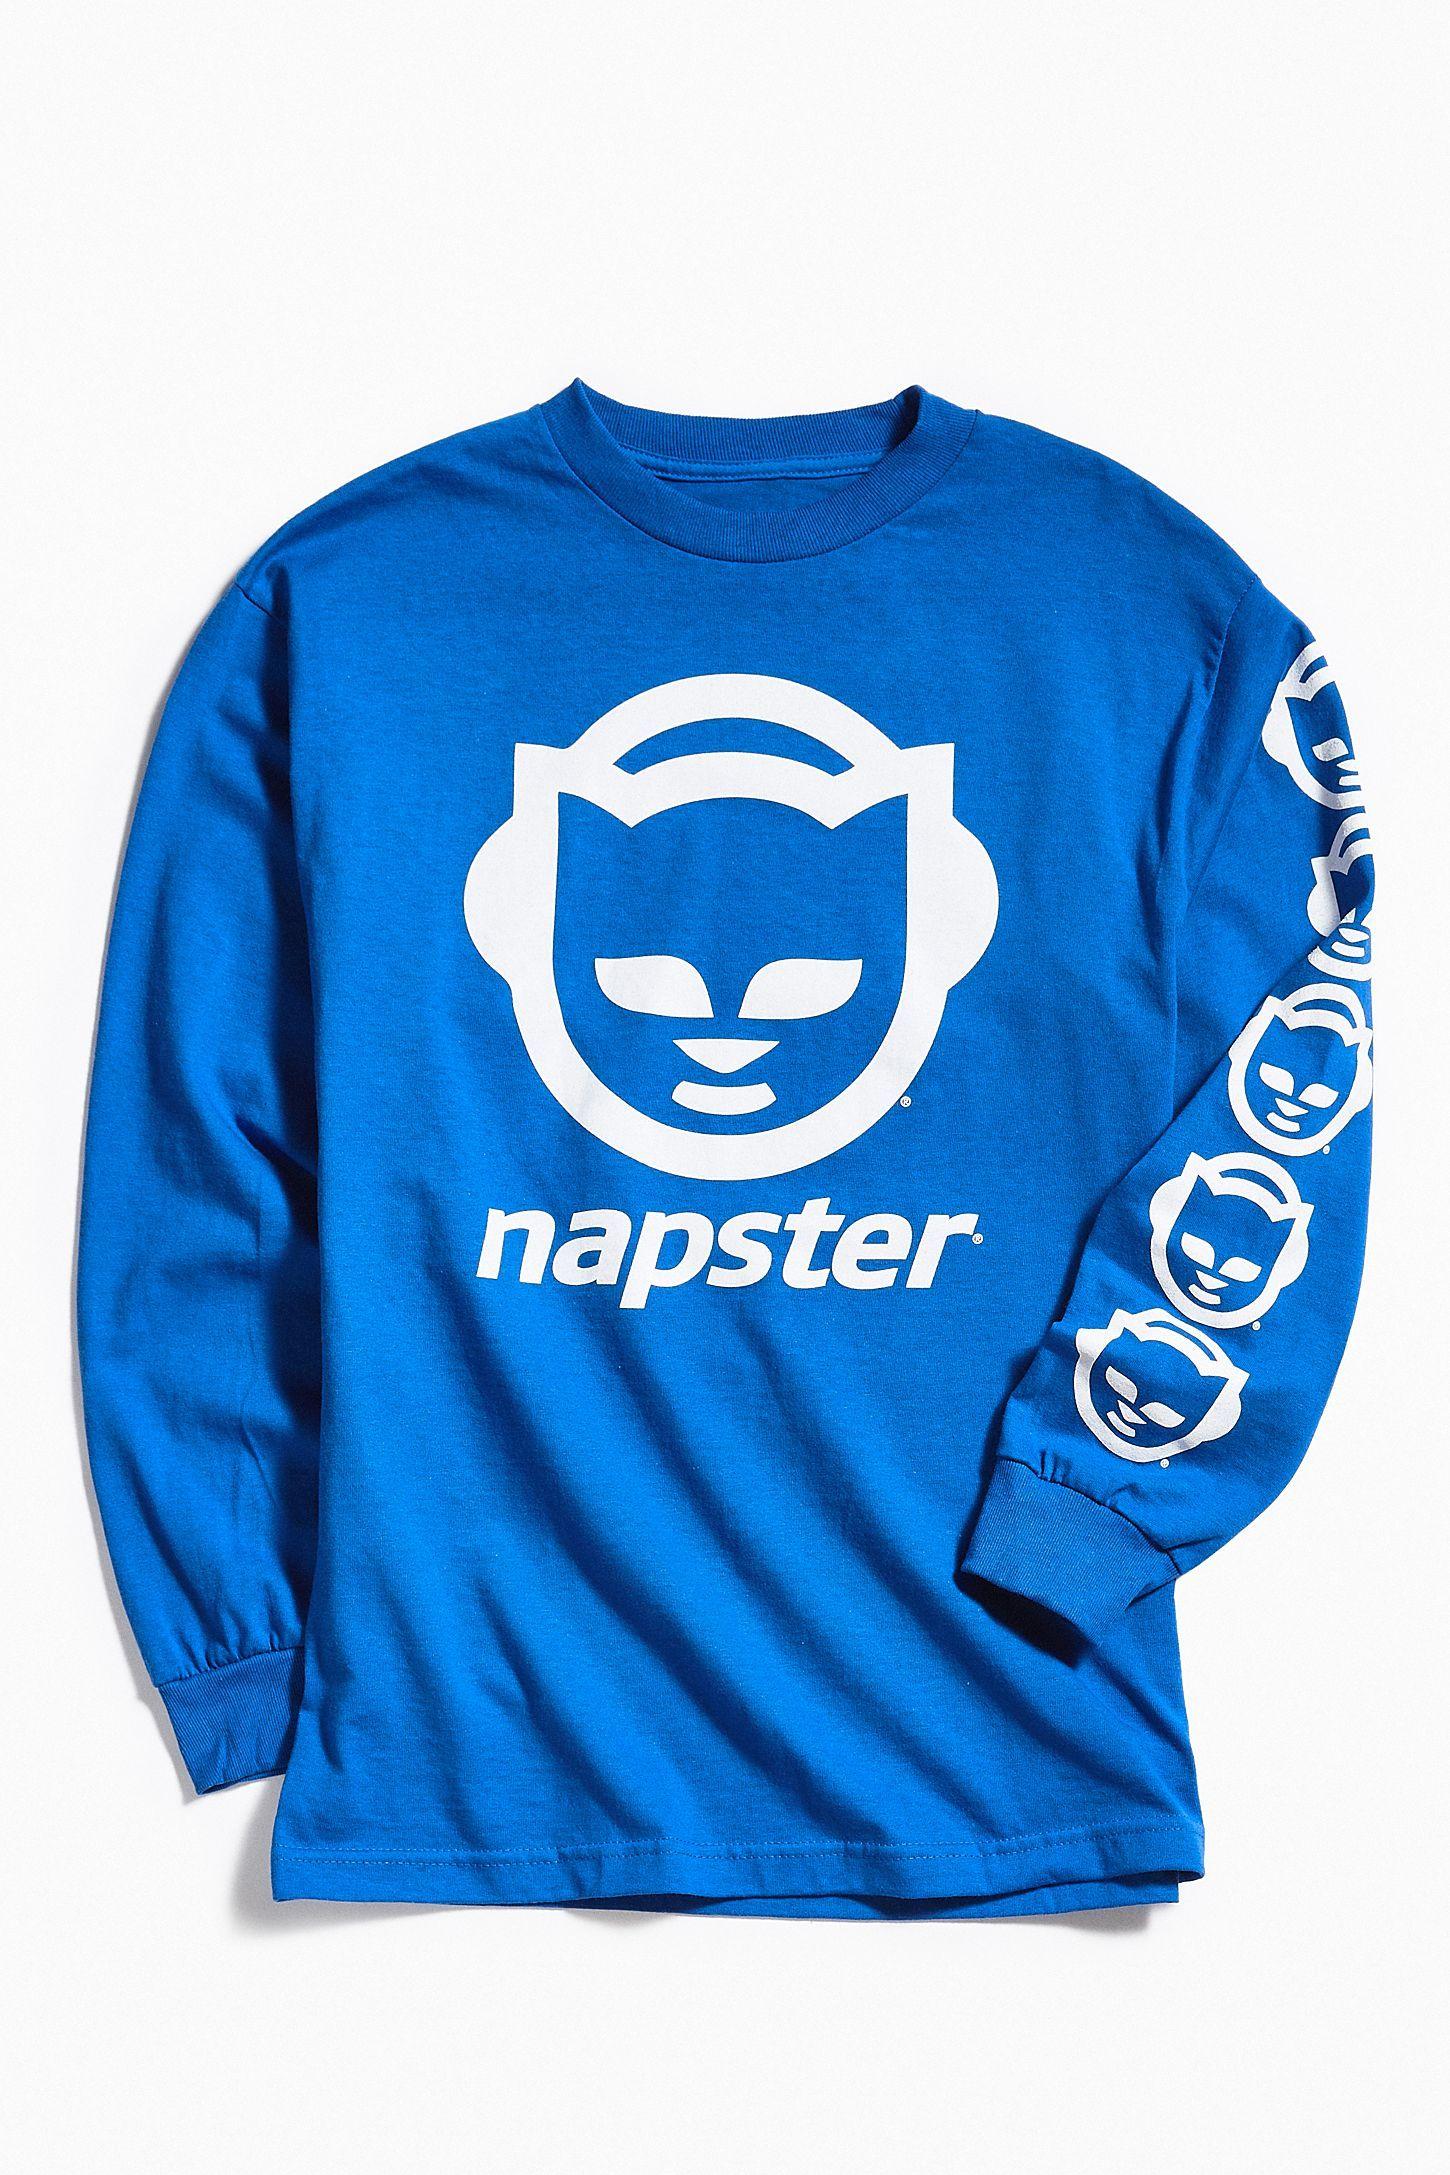 I Can Use Napster Logo - Napster Logo Long Sleeve Tee